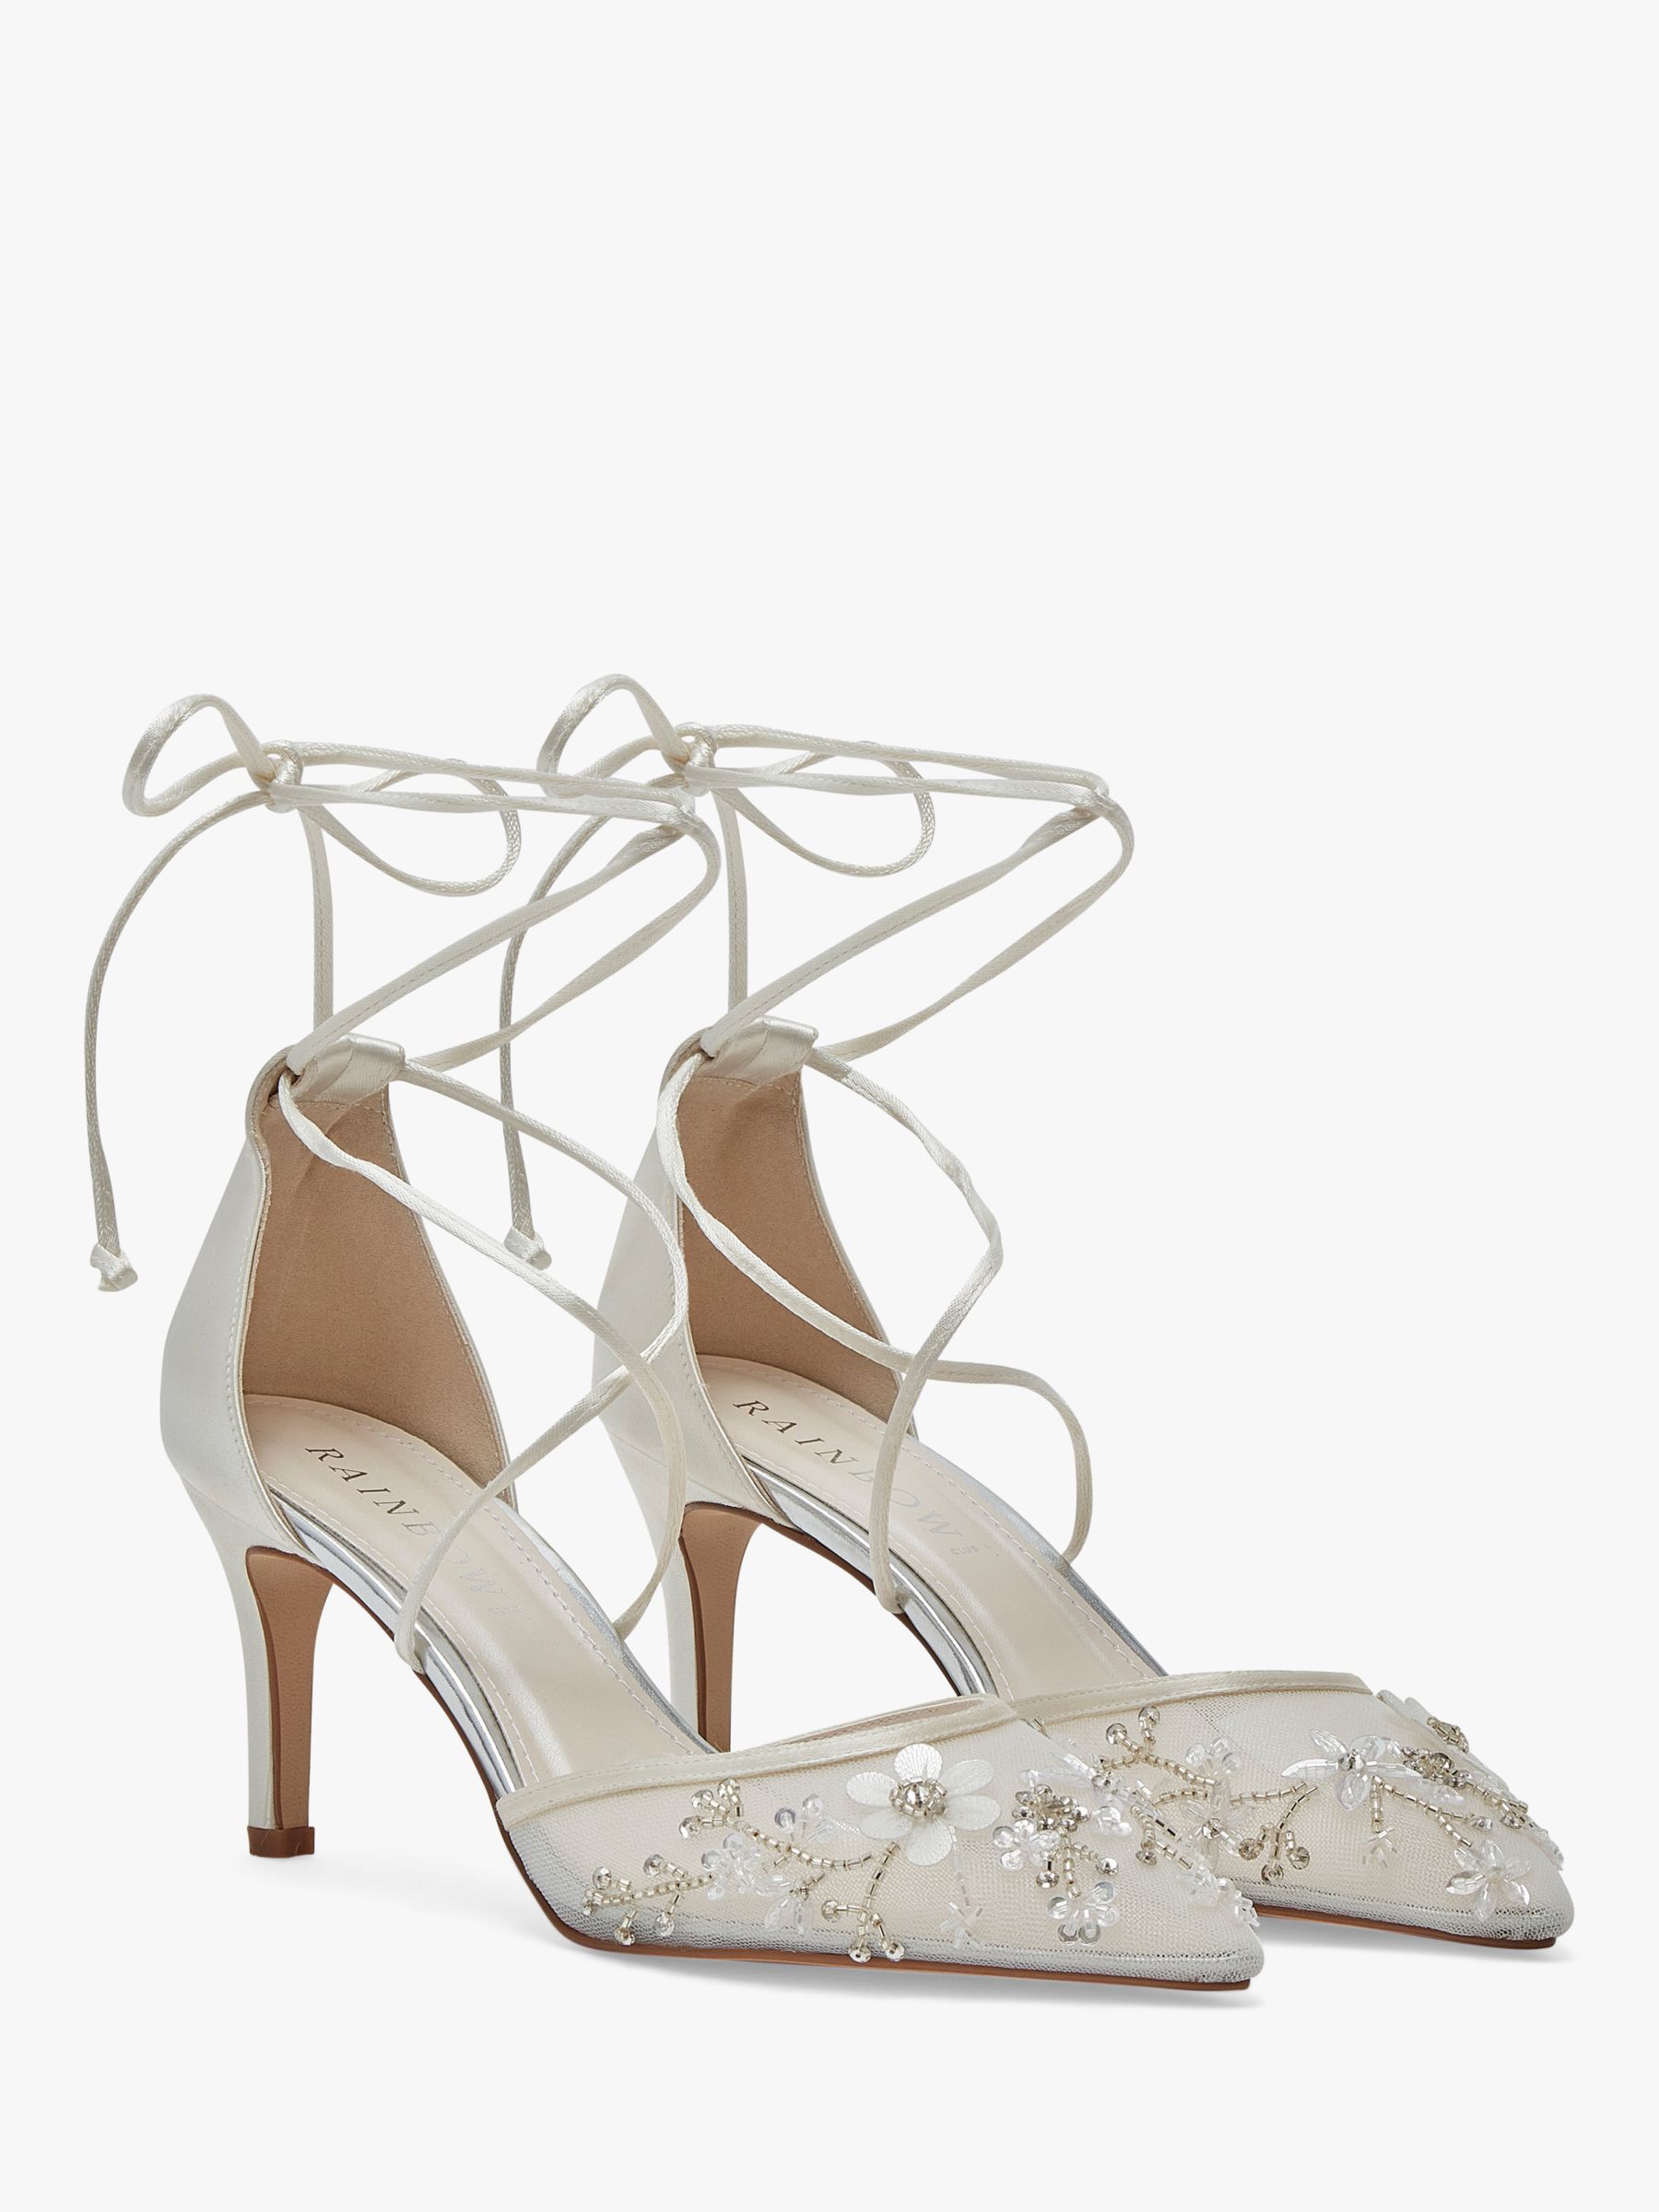 Rainbow Club Mirabella Satin & Tulle Bridal Shoes, Ivory Satin, 3